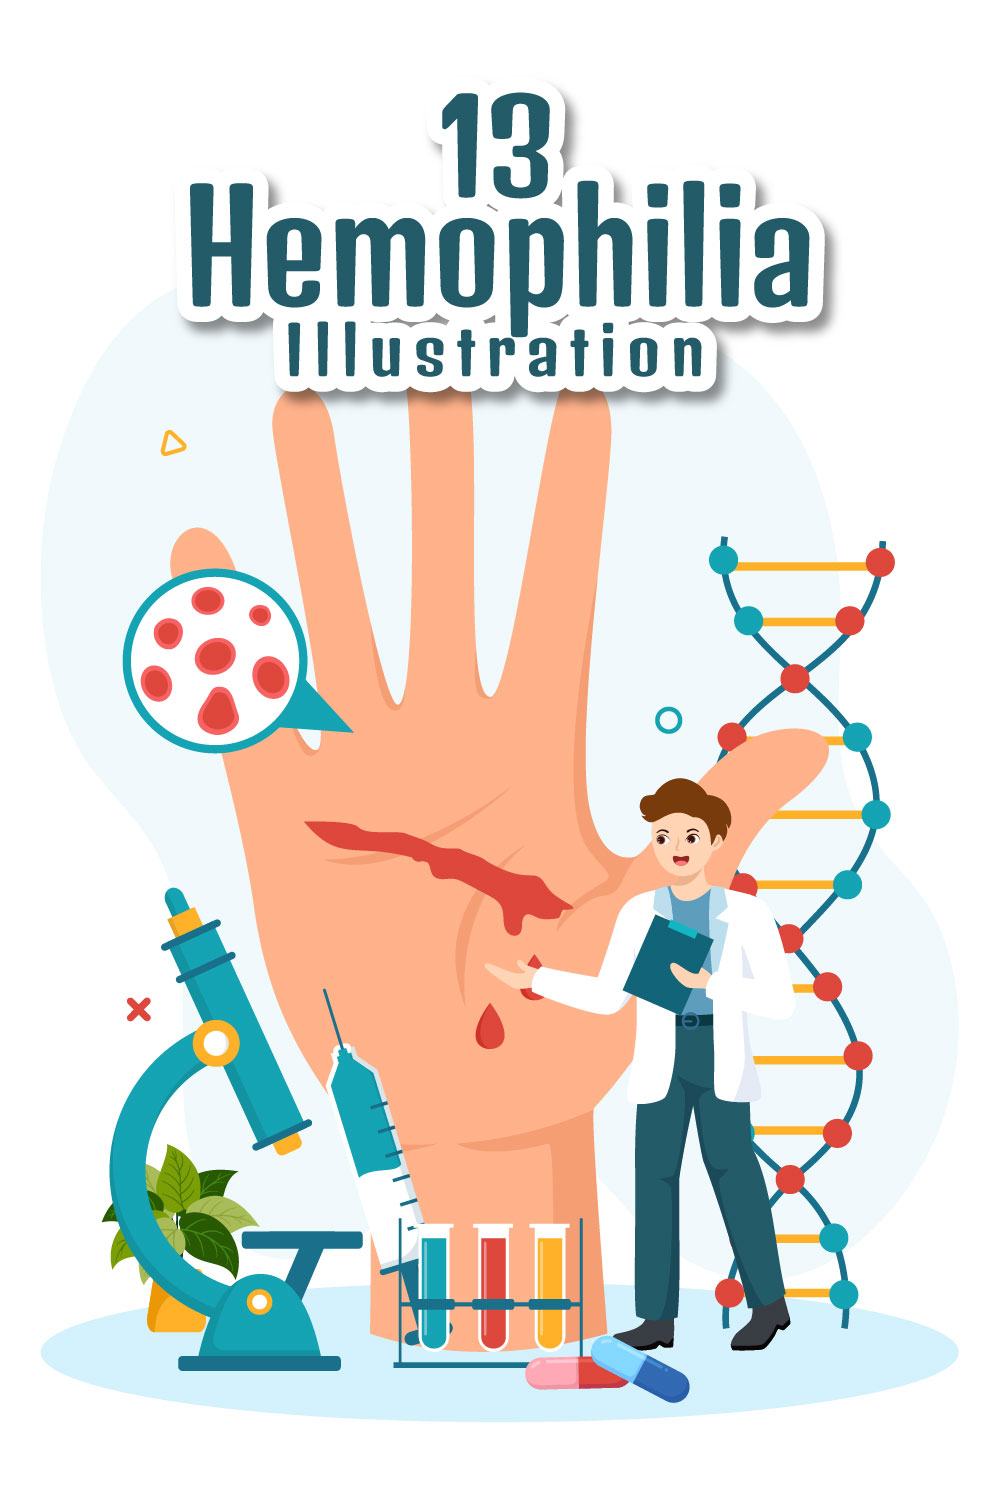 13 Hemophilia Disease Illustration pinterest preview image.